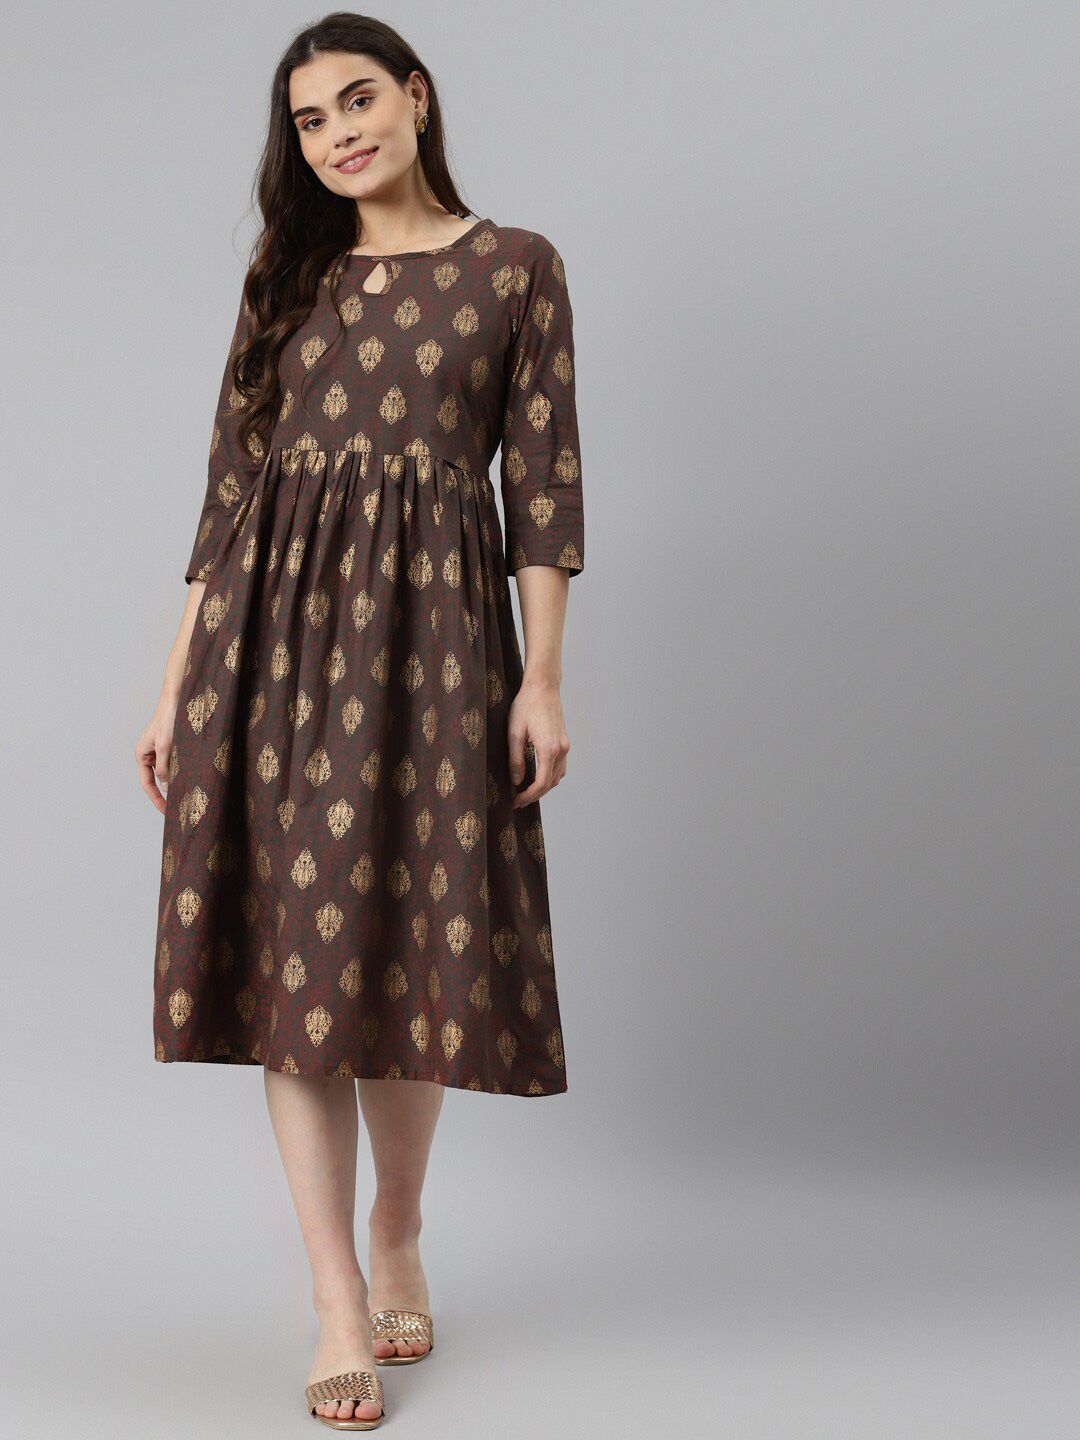 DESI BEATS Grey & Golden Ethnic Motifs Printed Pure Cotton A-Line Midi Dress Price in India